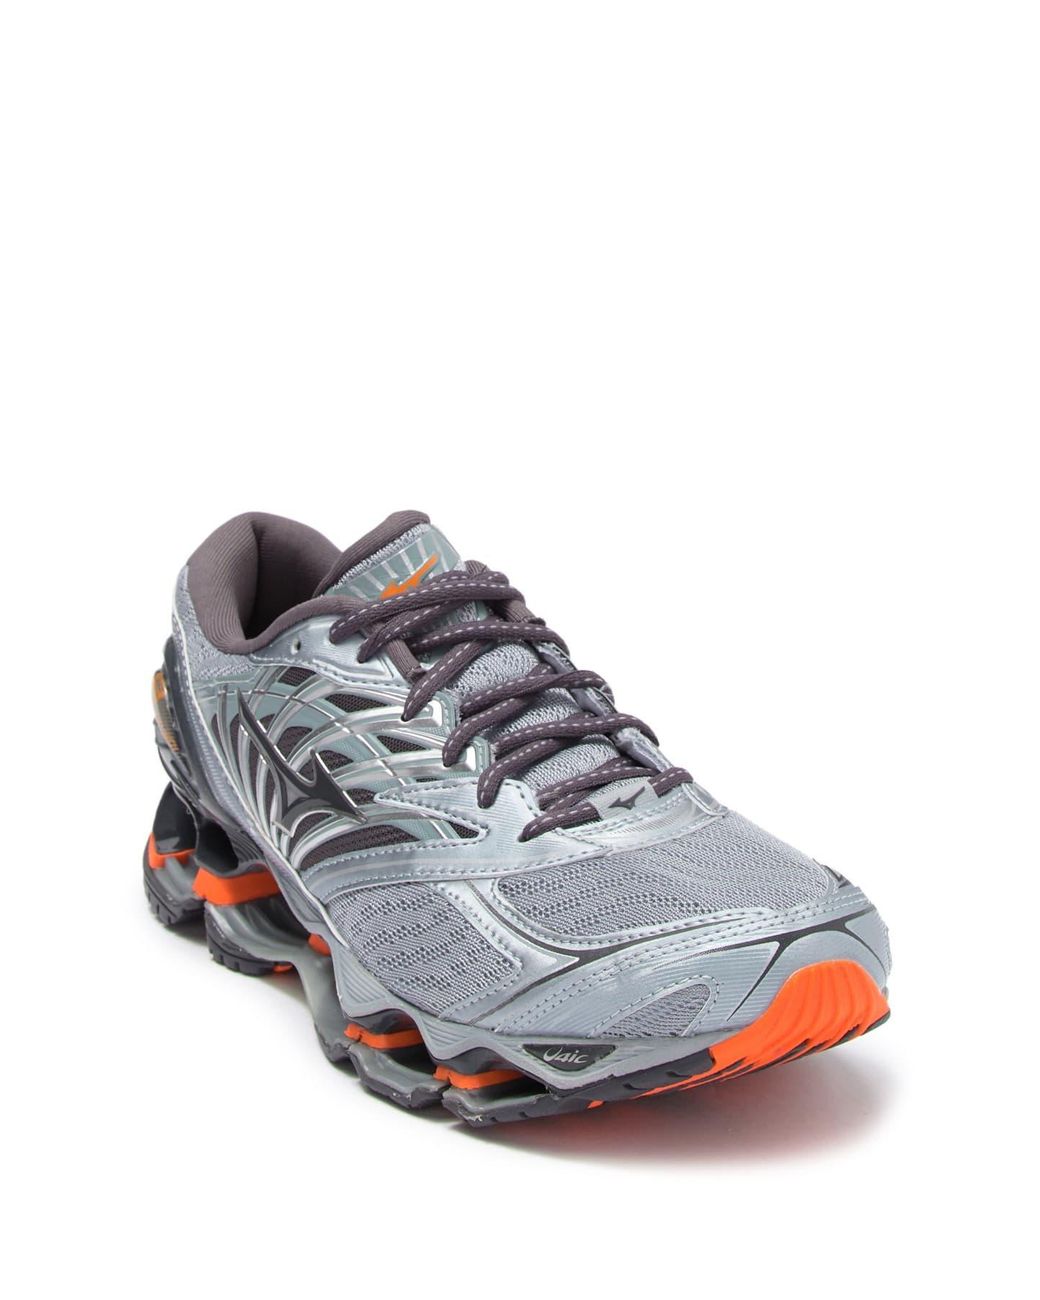 Mizuno Wave Prophecy 8 (quarry/graphite) Men's Running Shoes for Men | Lyst